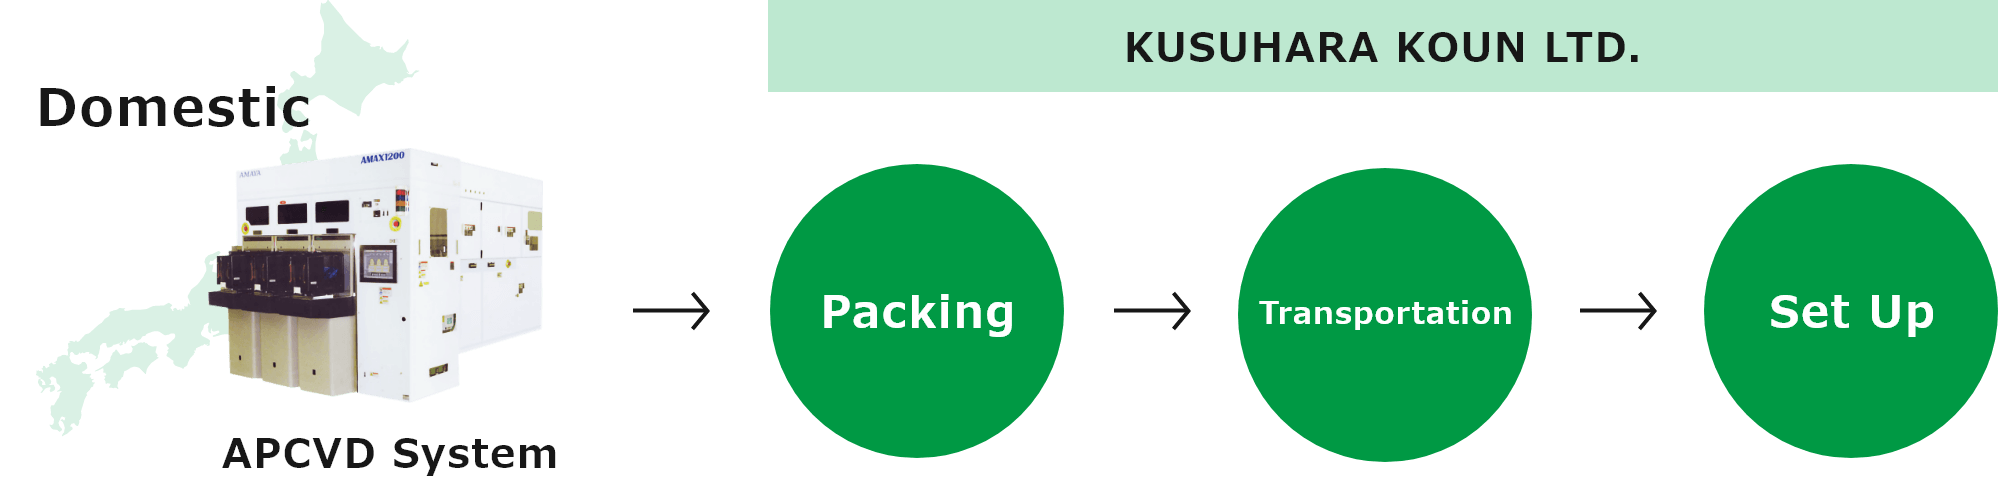 Domestic: Packing, Transportation, Set Up → KUSUHARA KOUN LTD.